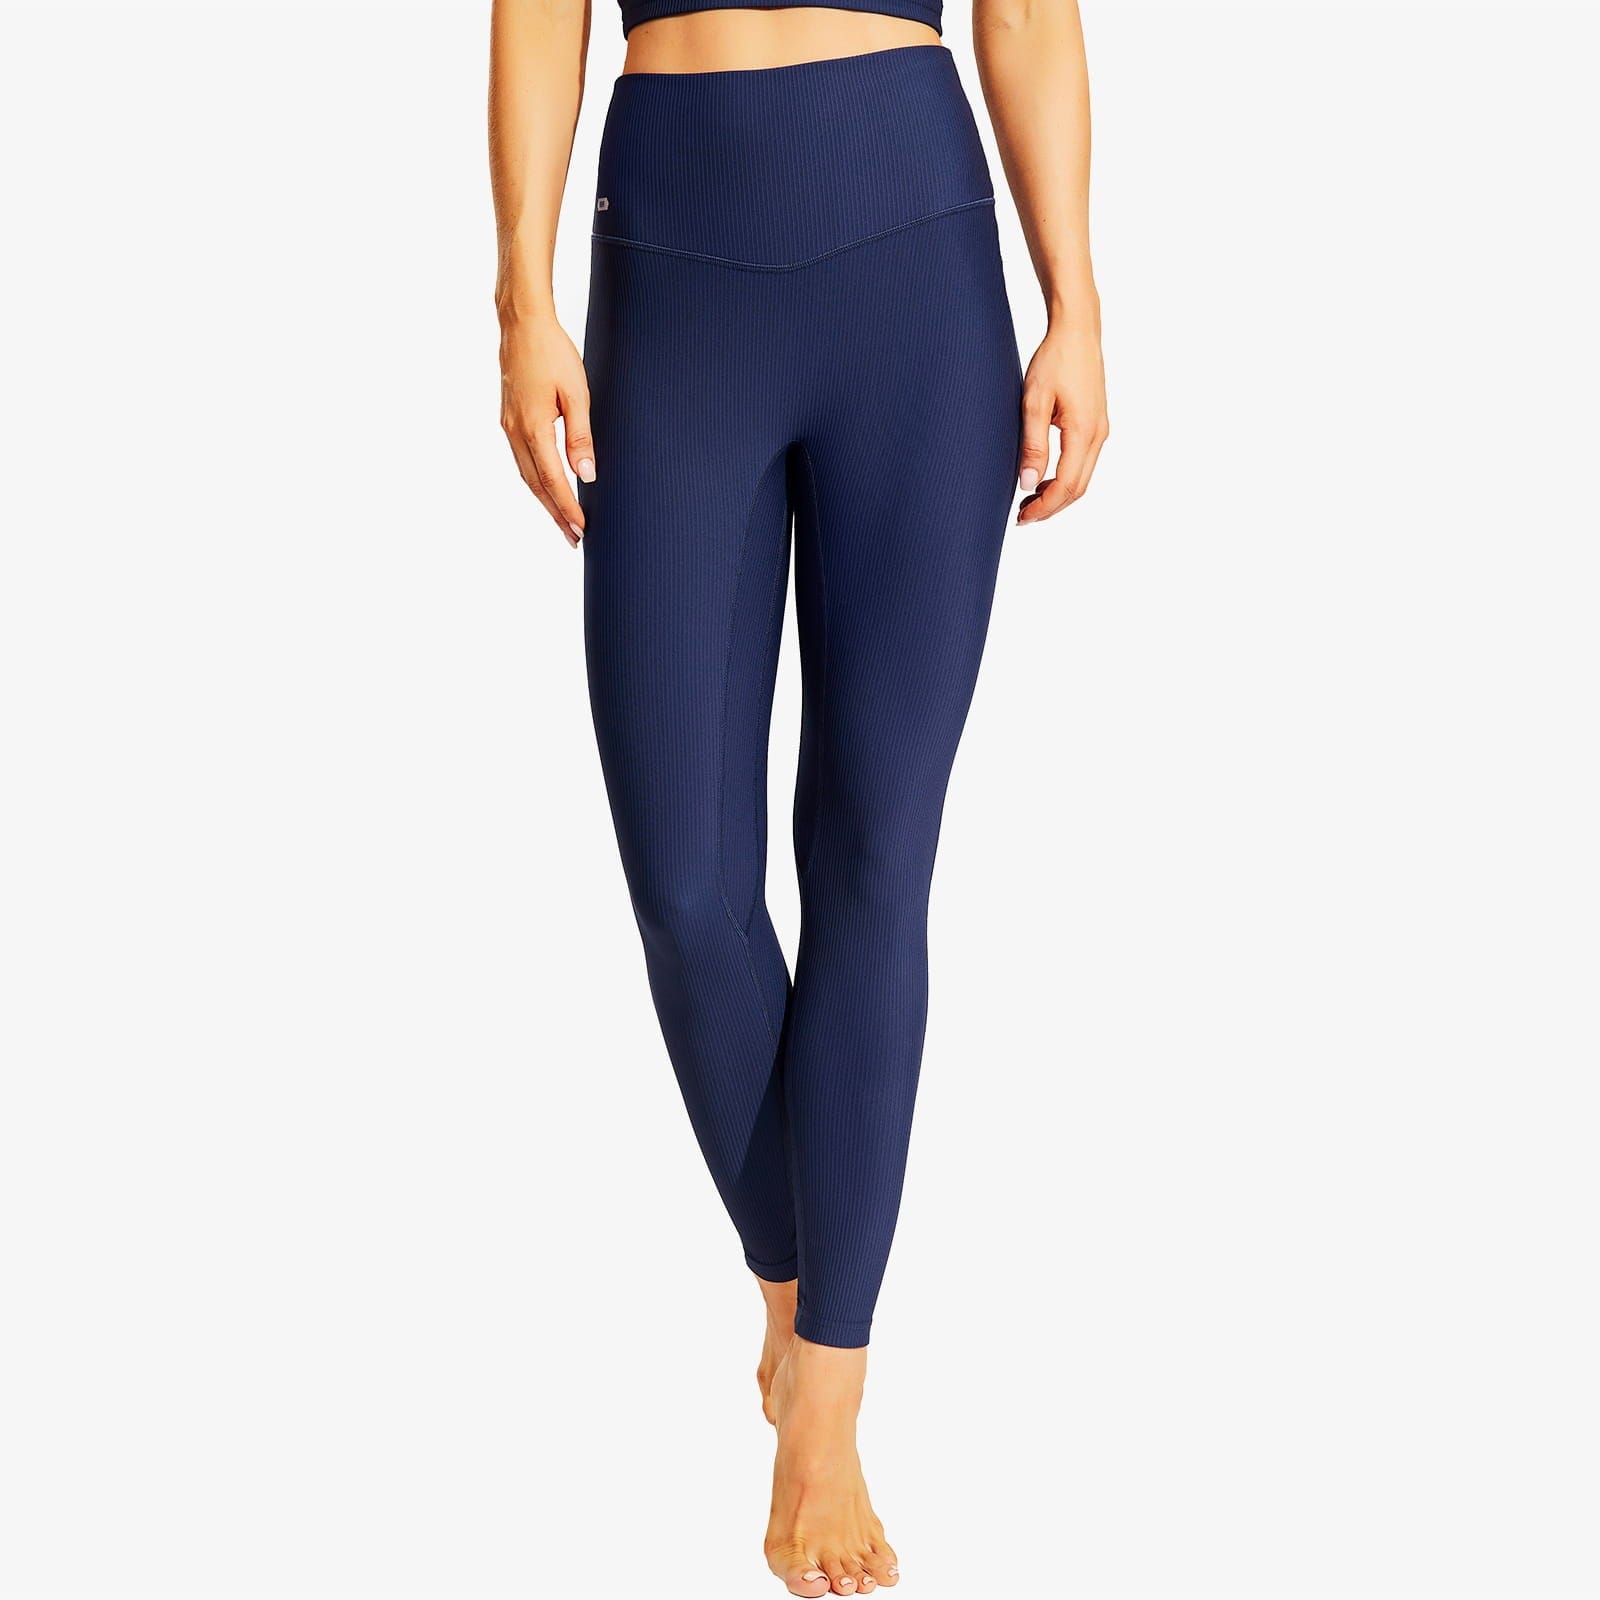 Women’s High Waisted Workout Leggings with Inside Pockets Women Yoga Pants Dark Blue / XS MIER